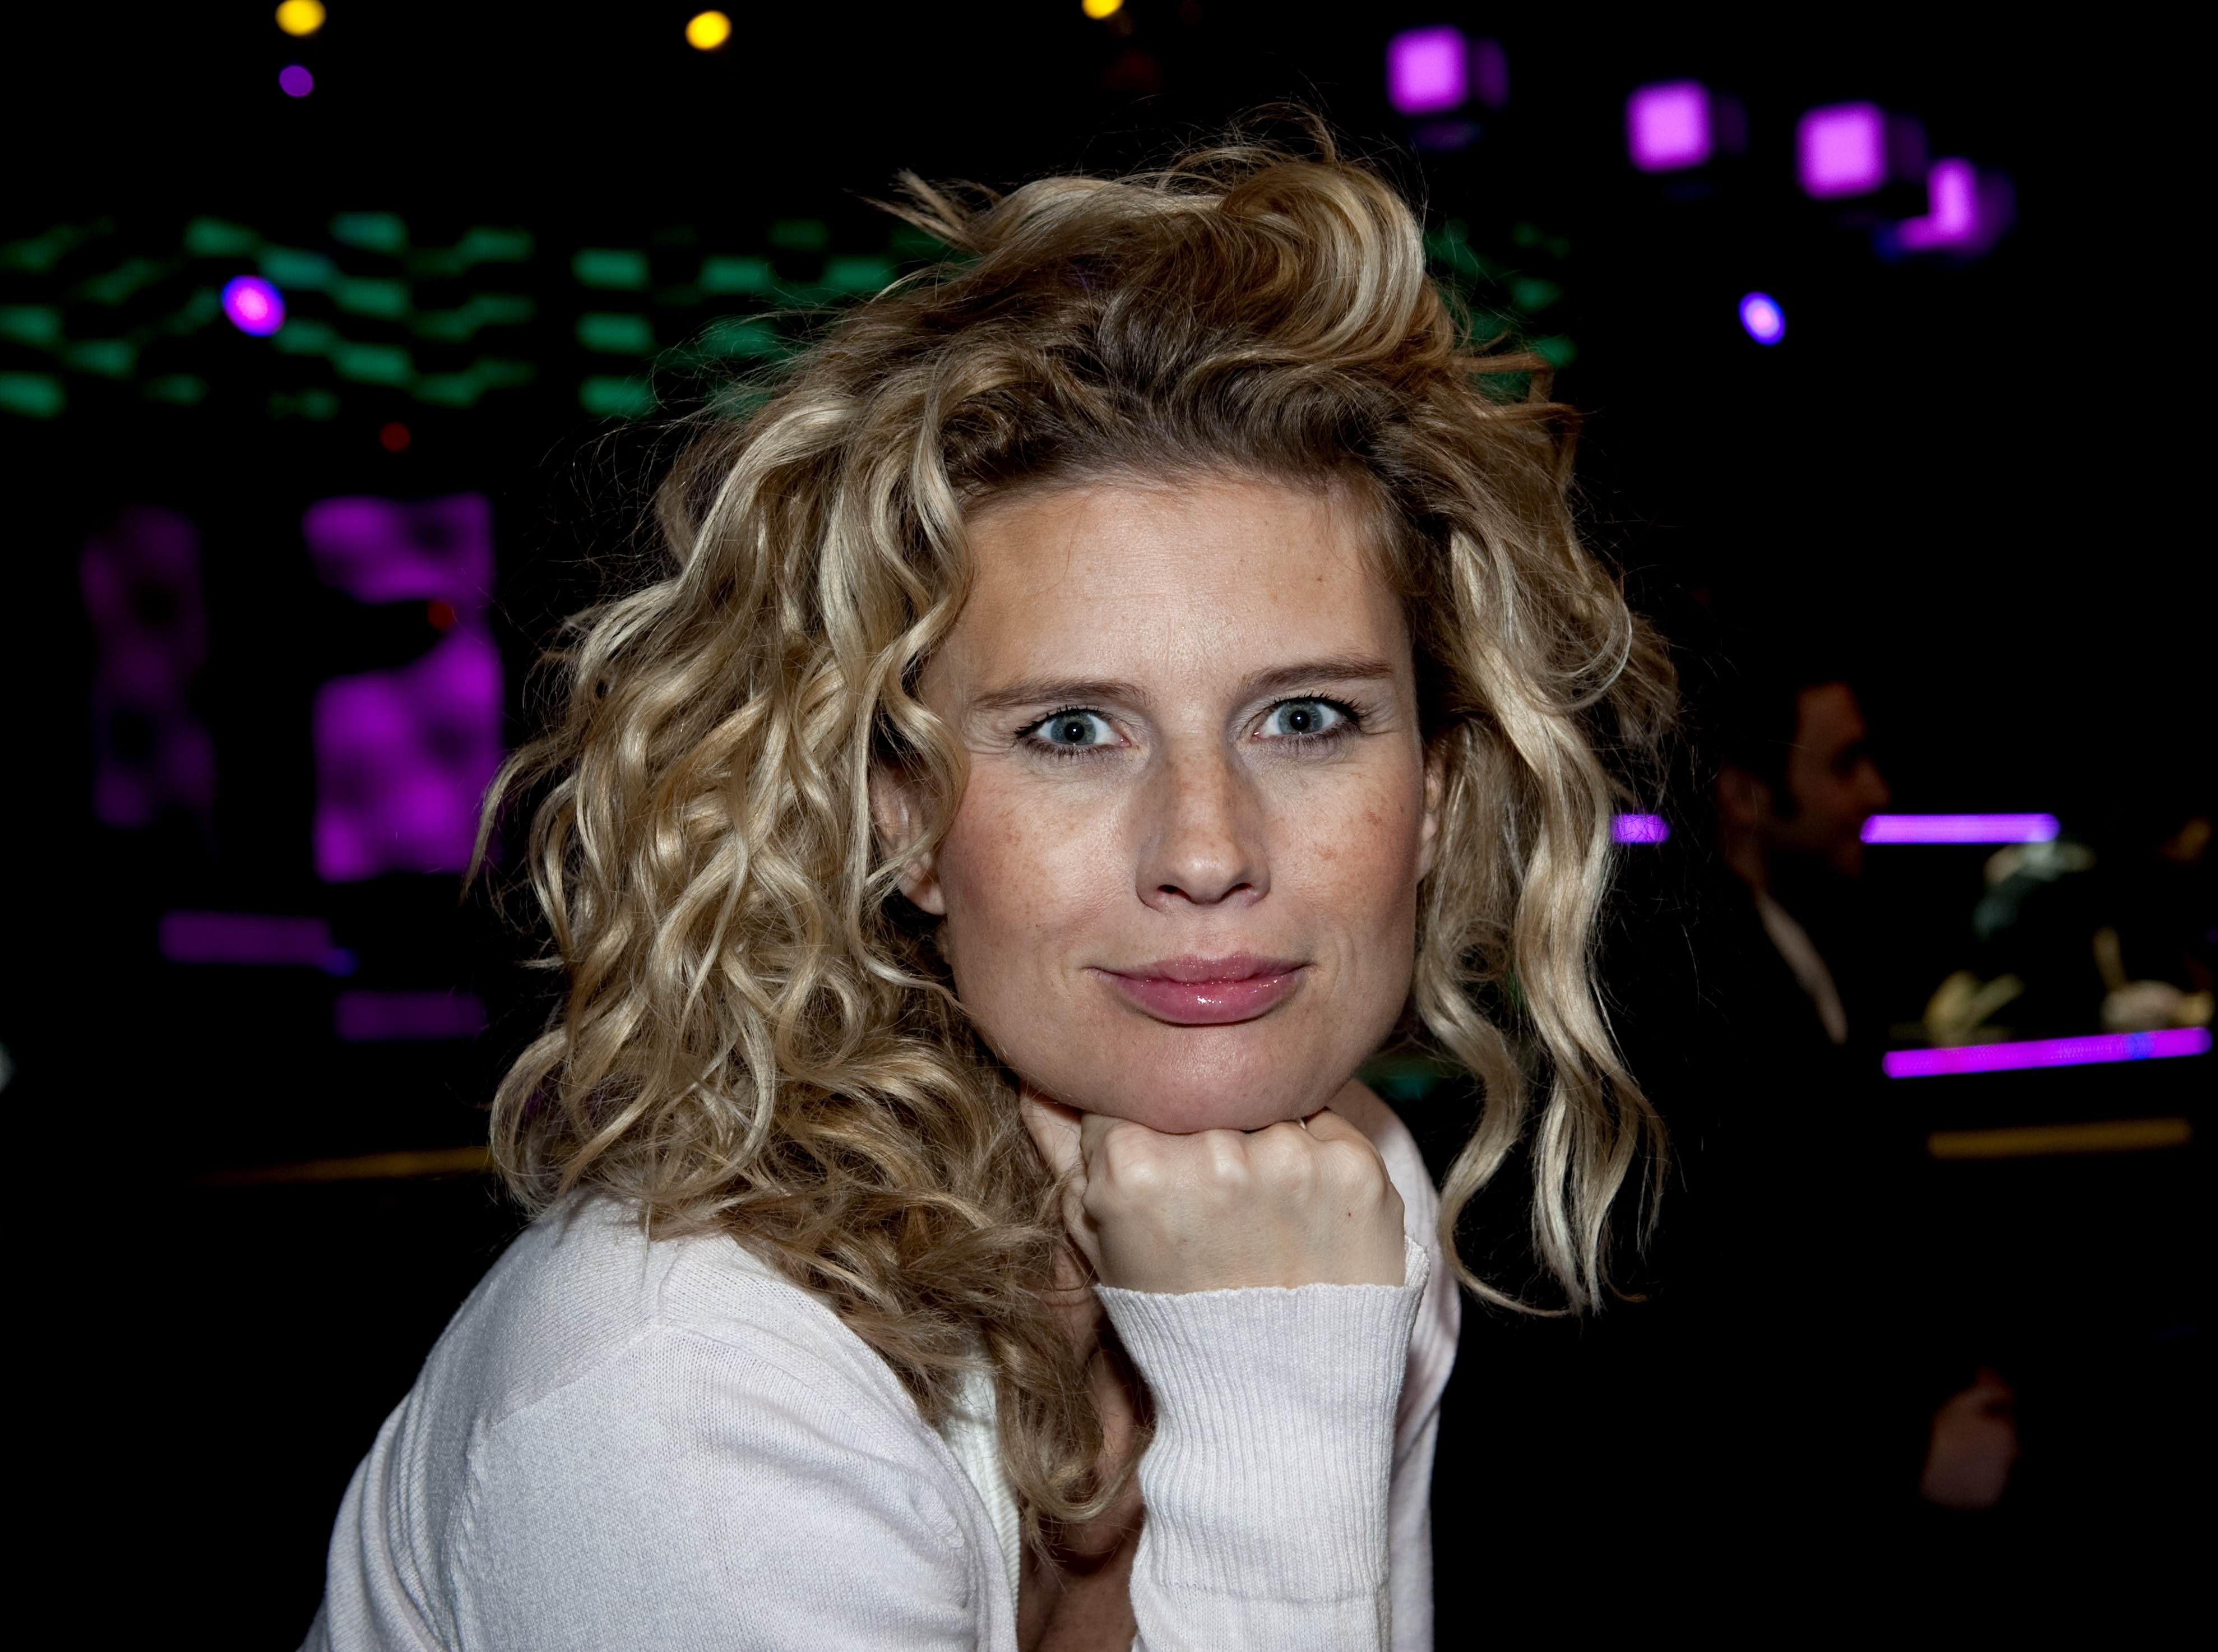 Eurovision Song Contest 2010, Christine Meltzer, Melodifestivalen 2010, Anna Bergendahl